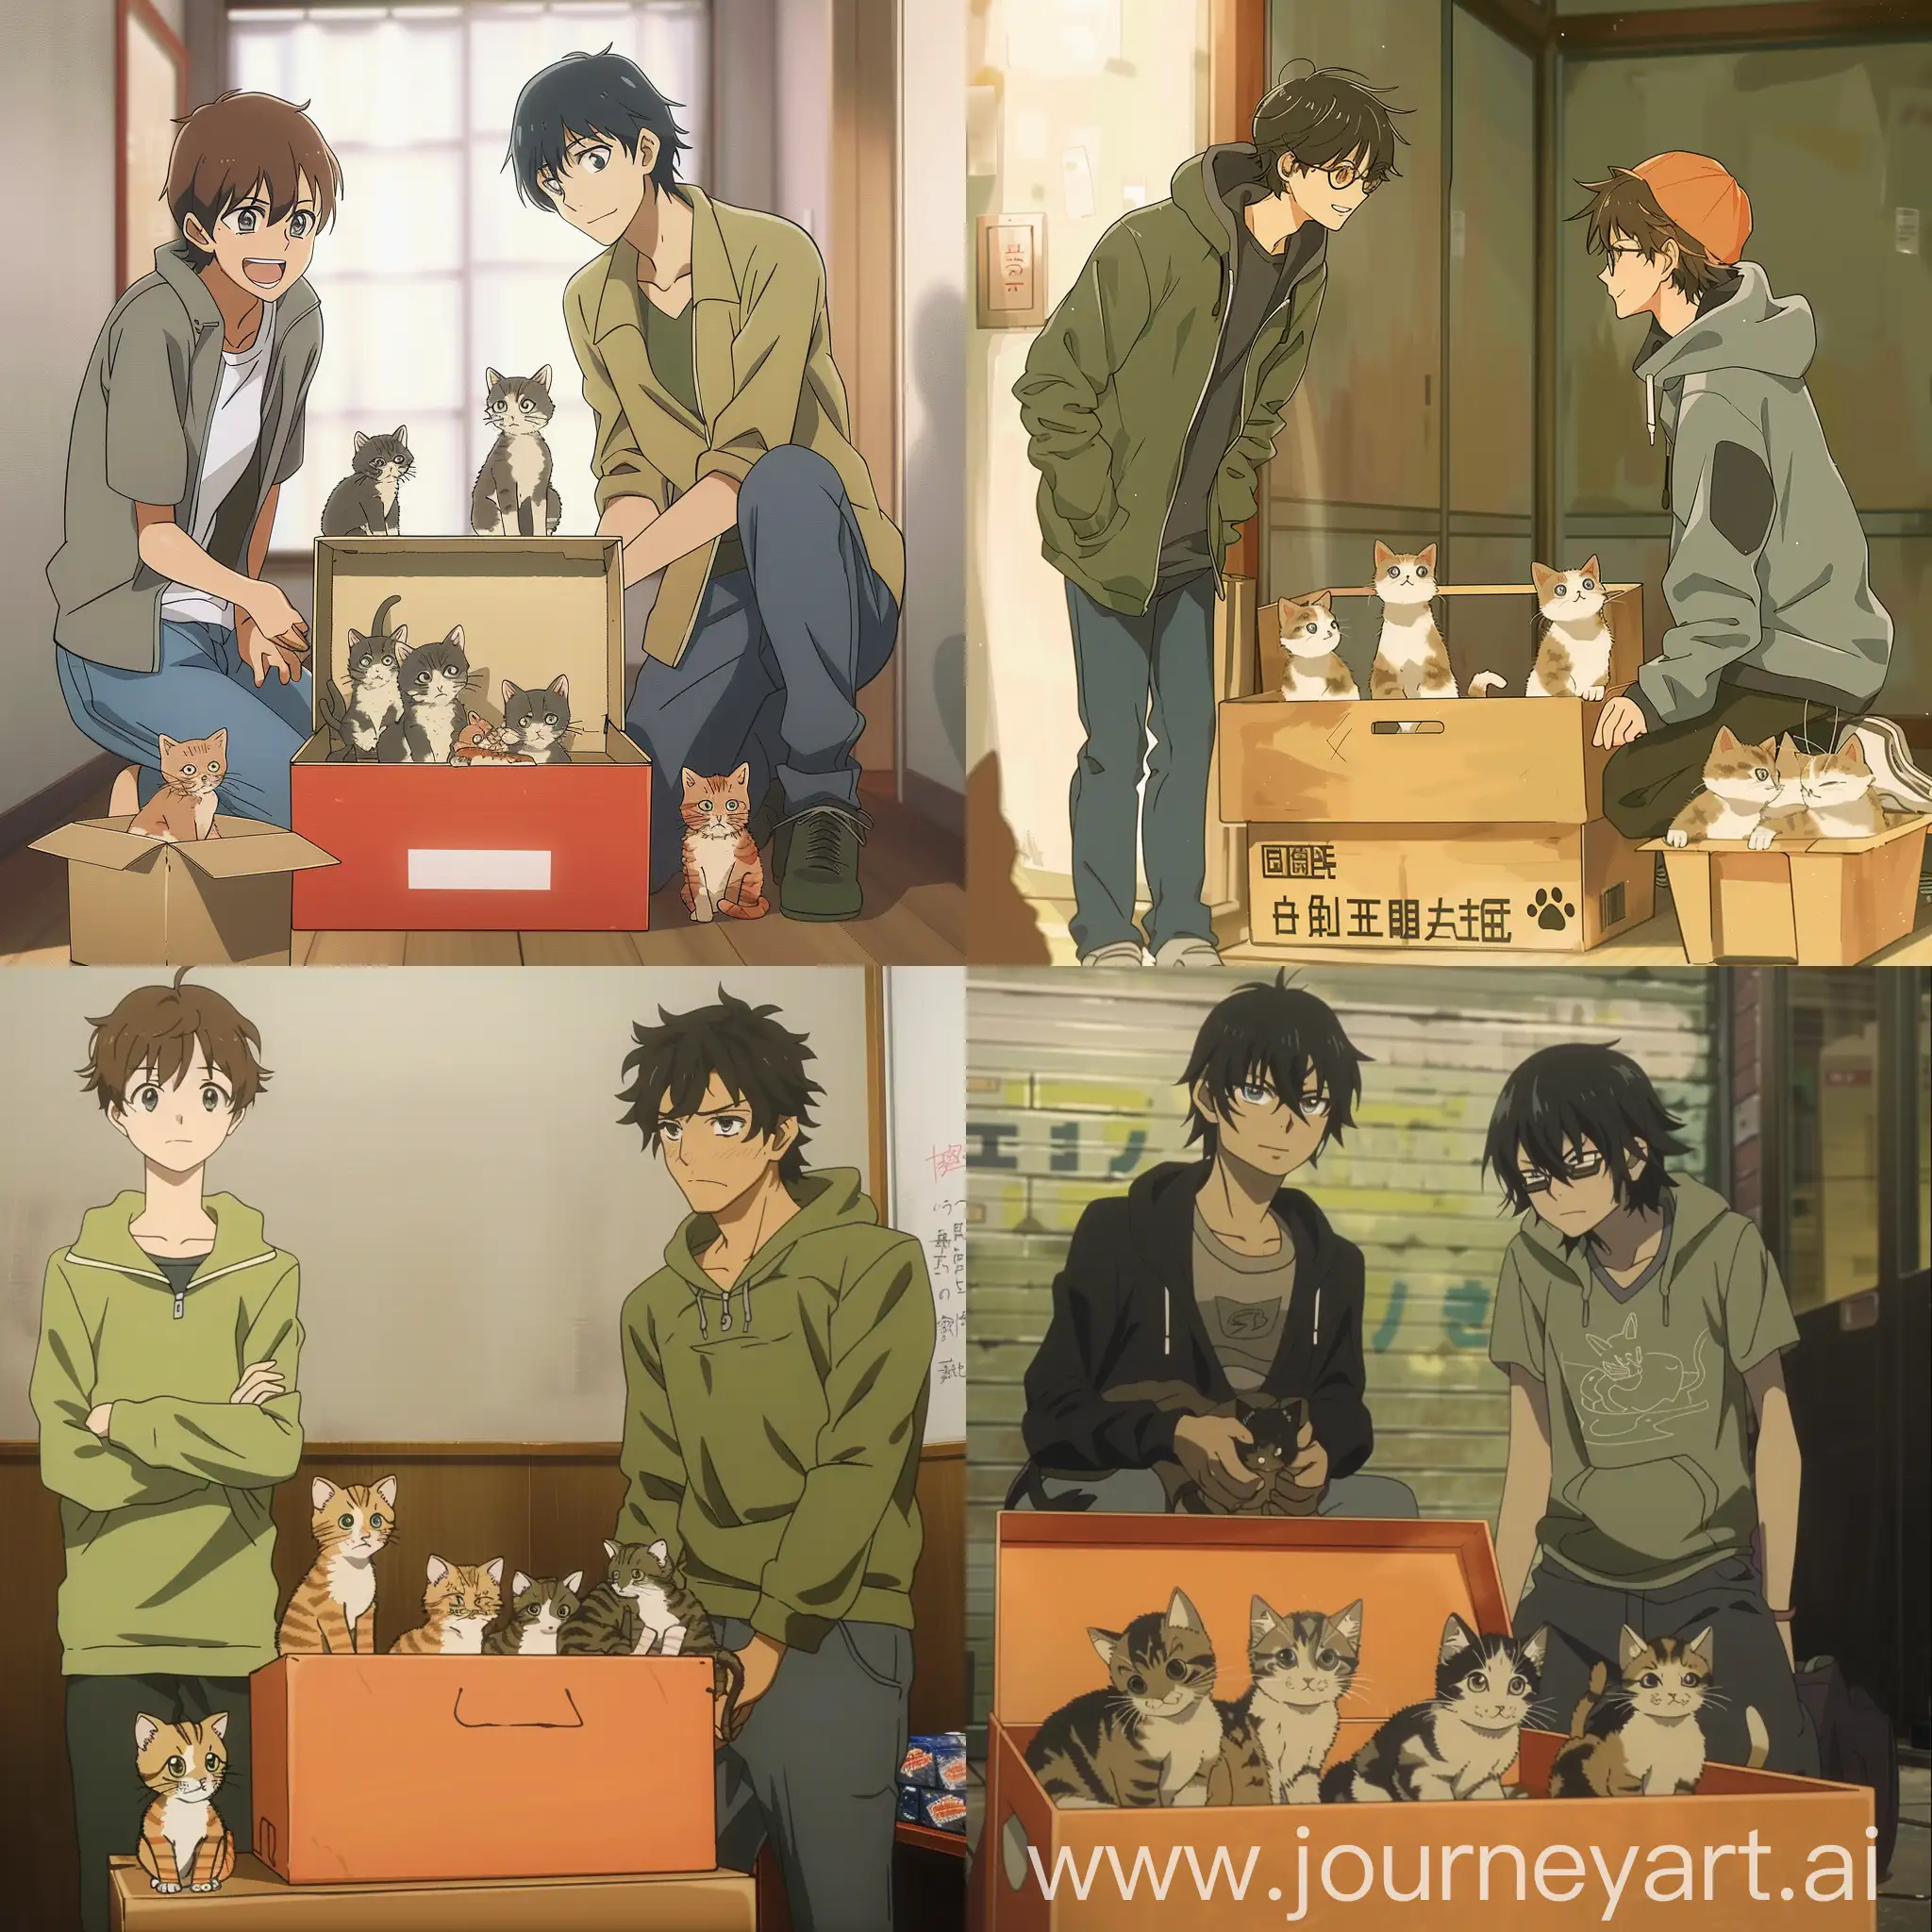 Anime-Couple-Admiring-Kittens-in-Box